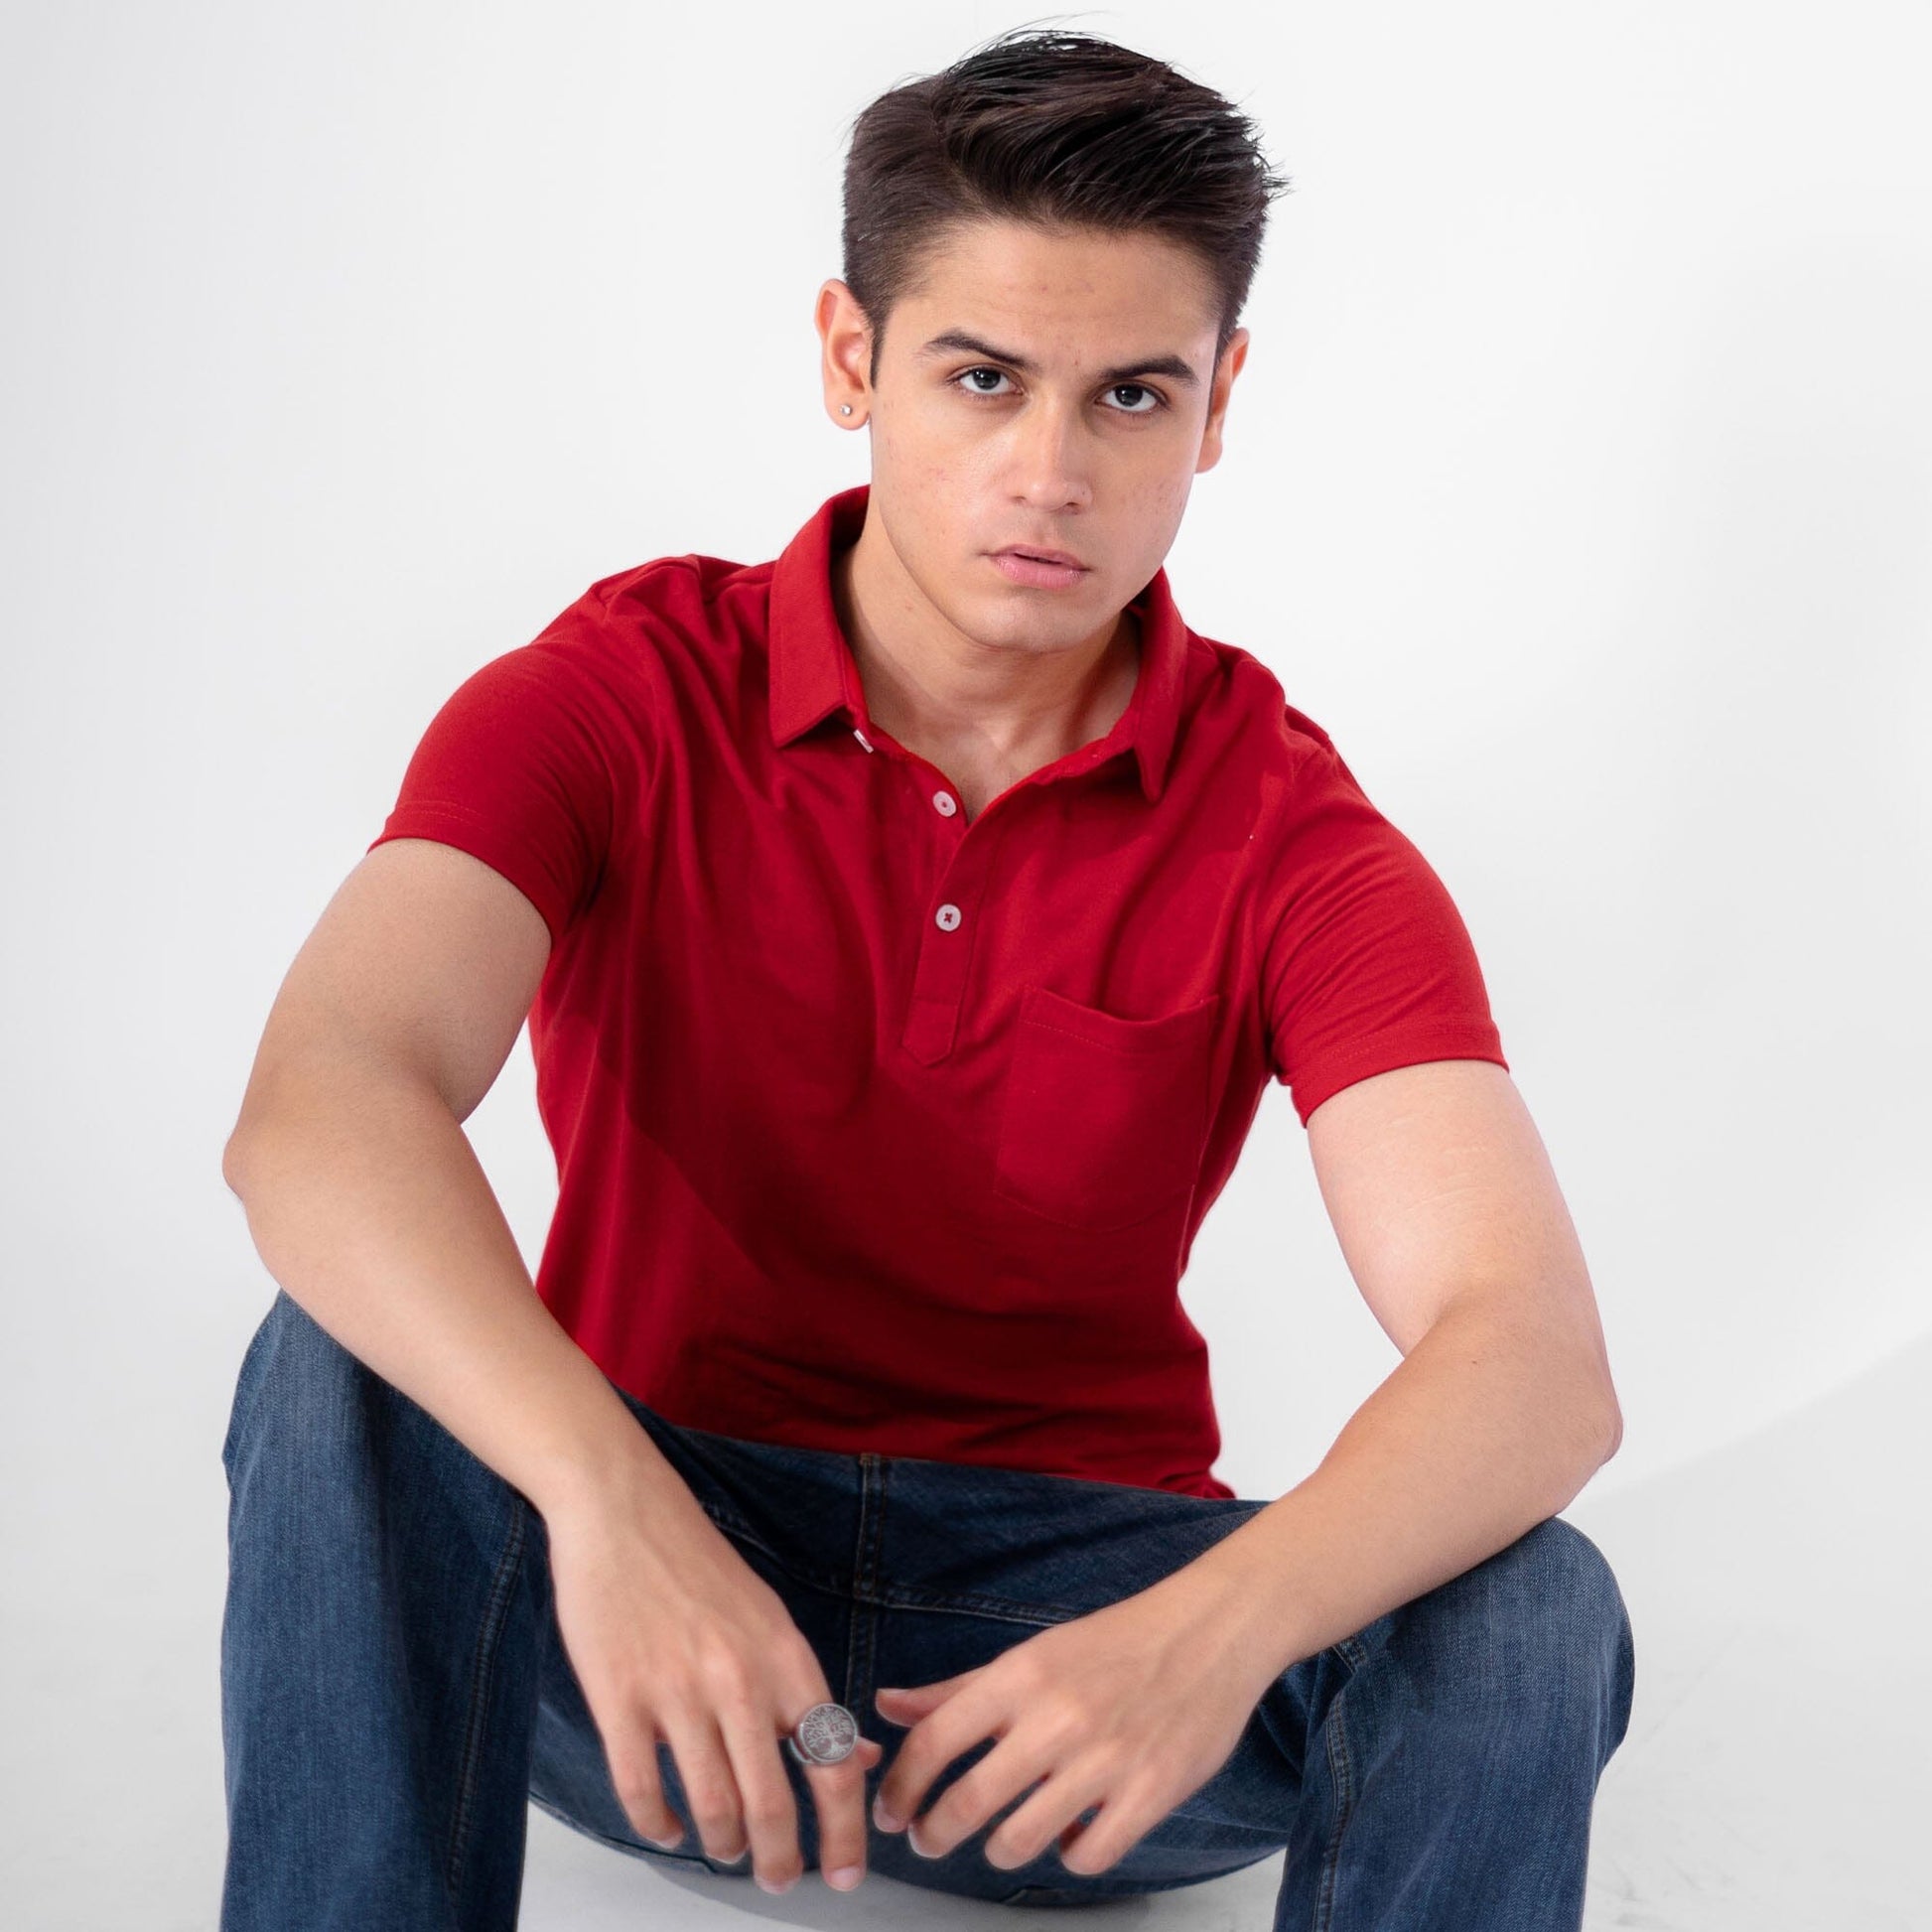 Polo Republica Men's Essentials Tailored Collar Pocket Polo Shirt Red